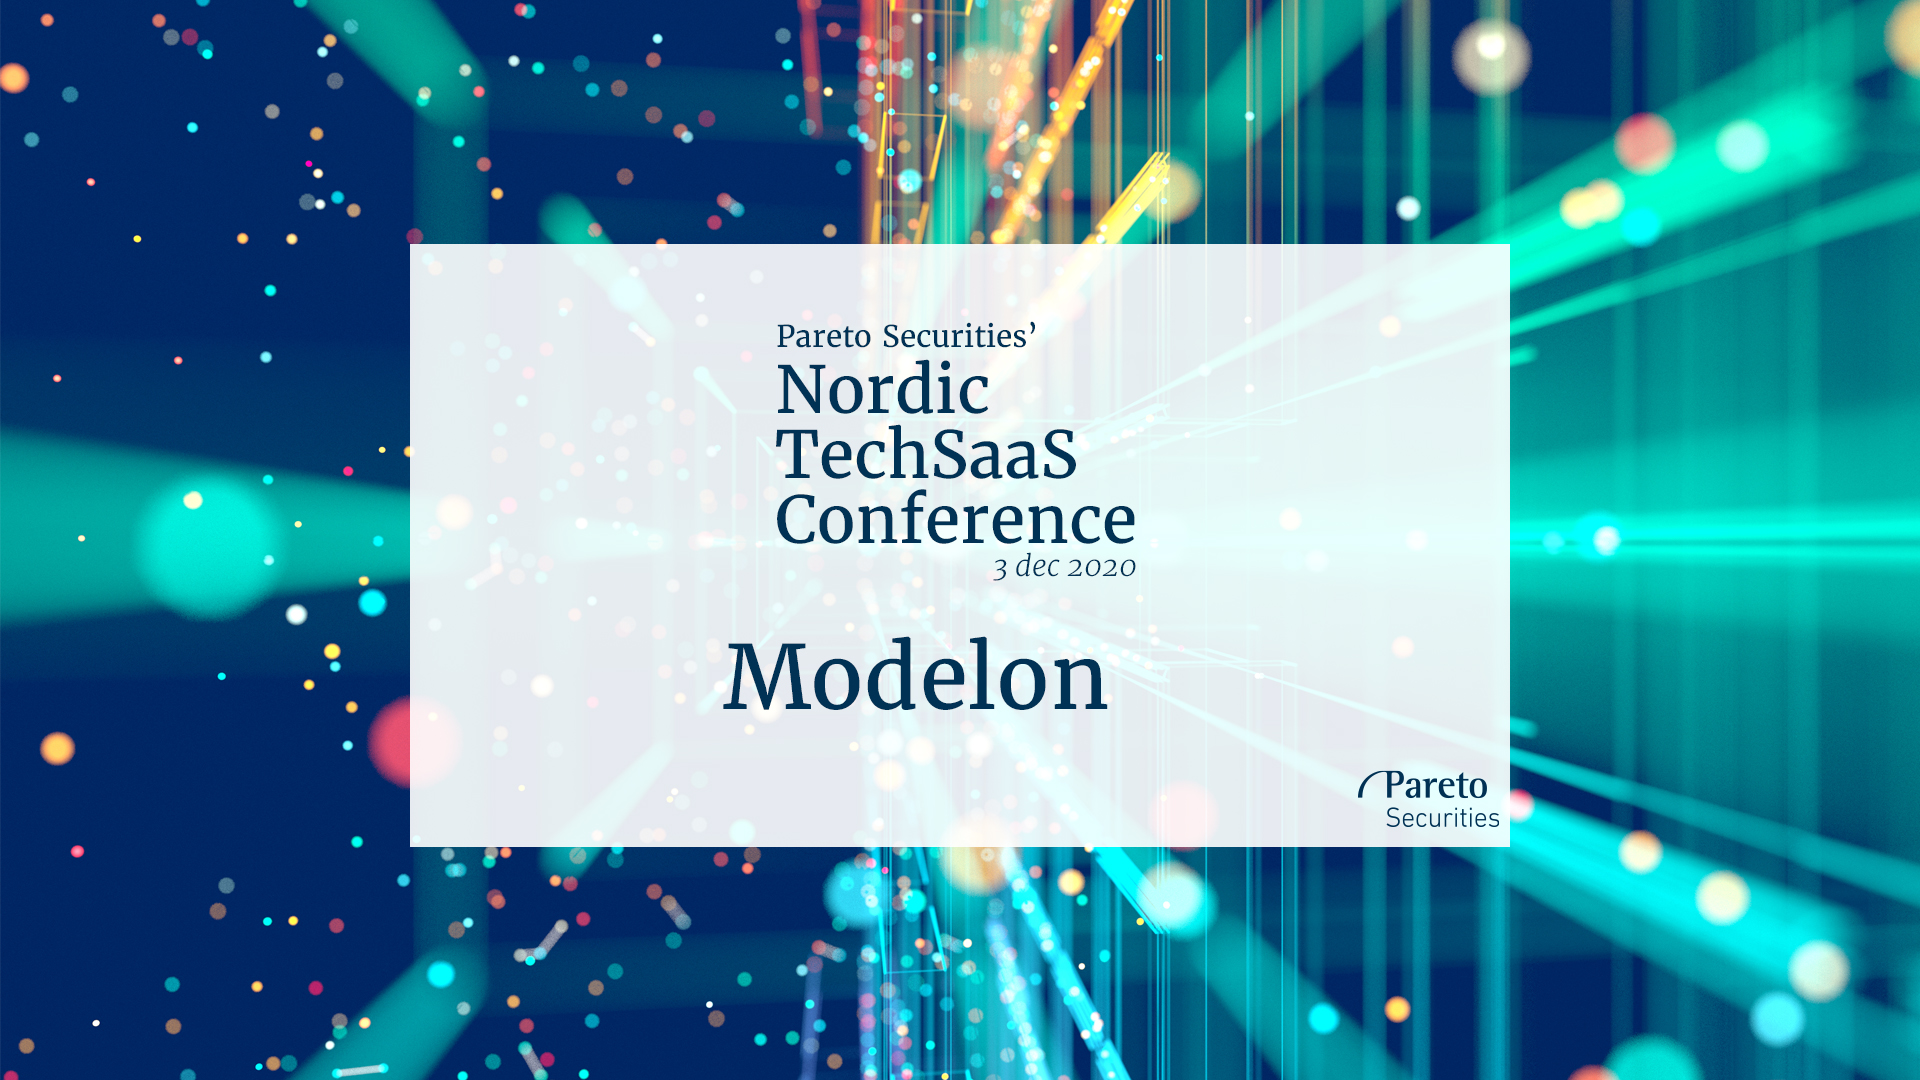 Modelon / Pareto Securities’ virtual Nordic TechSaaS Conference